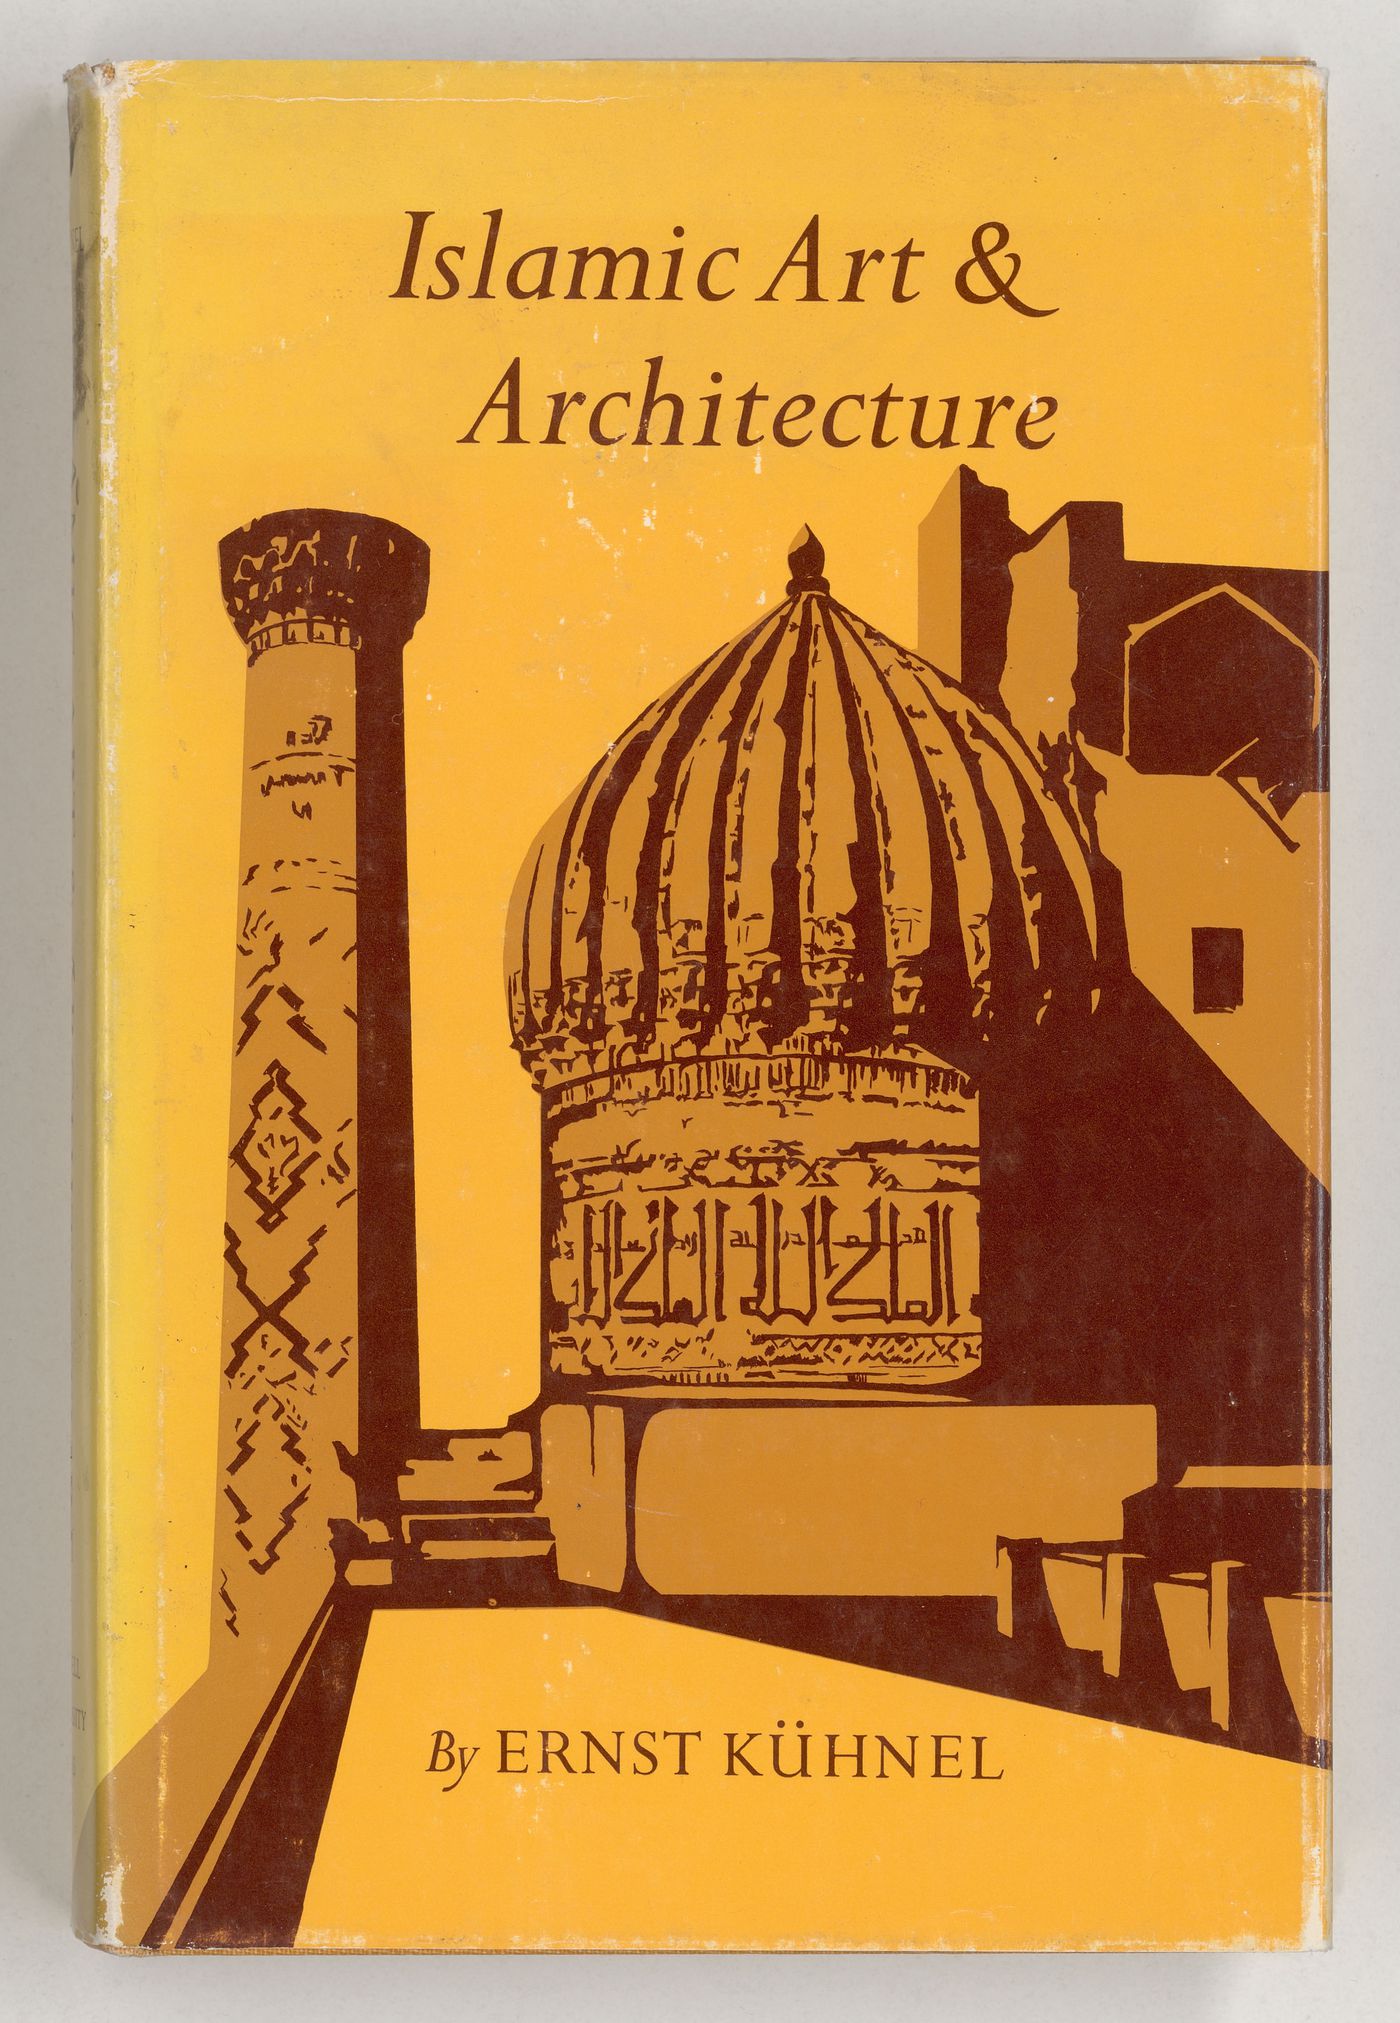 Islamic Art & Architecture